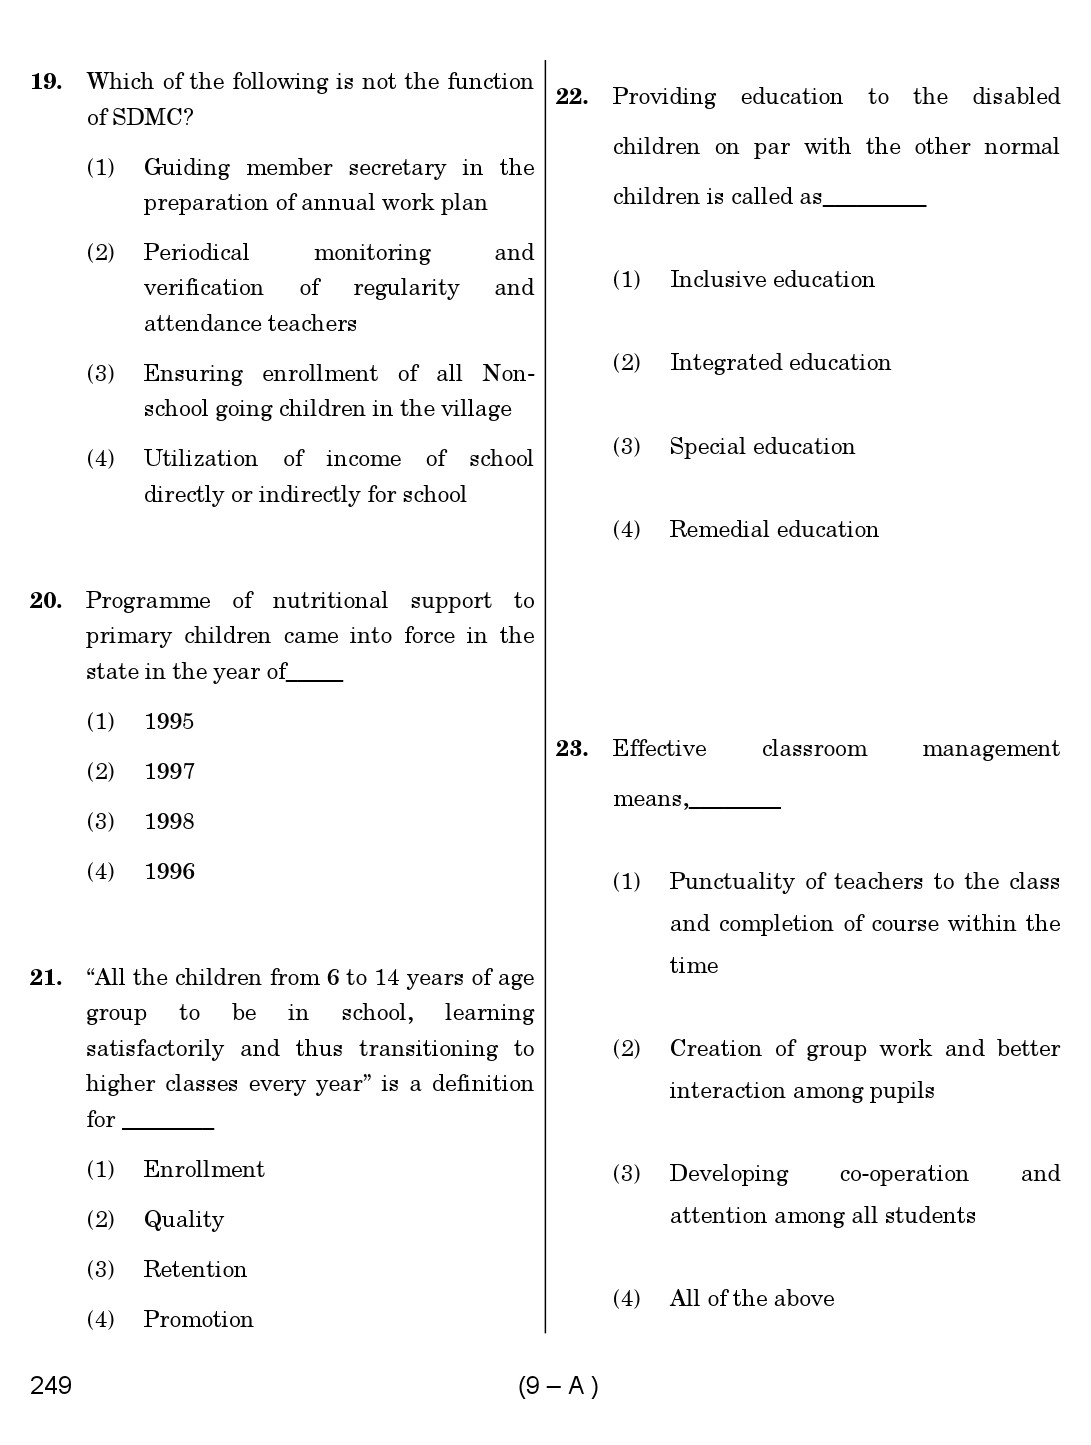 Karnataka PSC Principal Exam Sample Question Paper Subject code 249 9